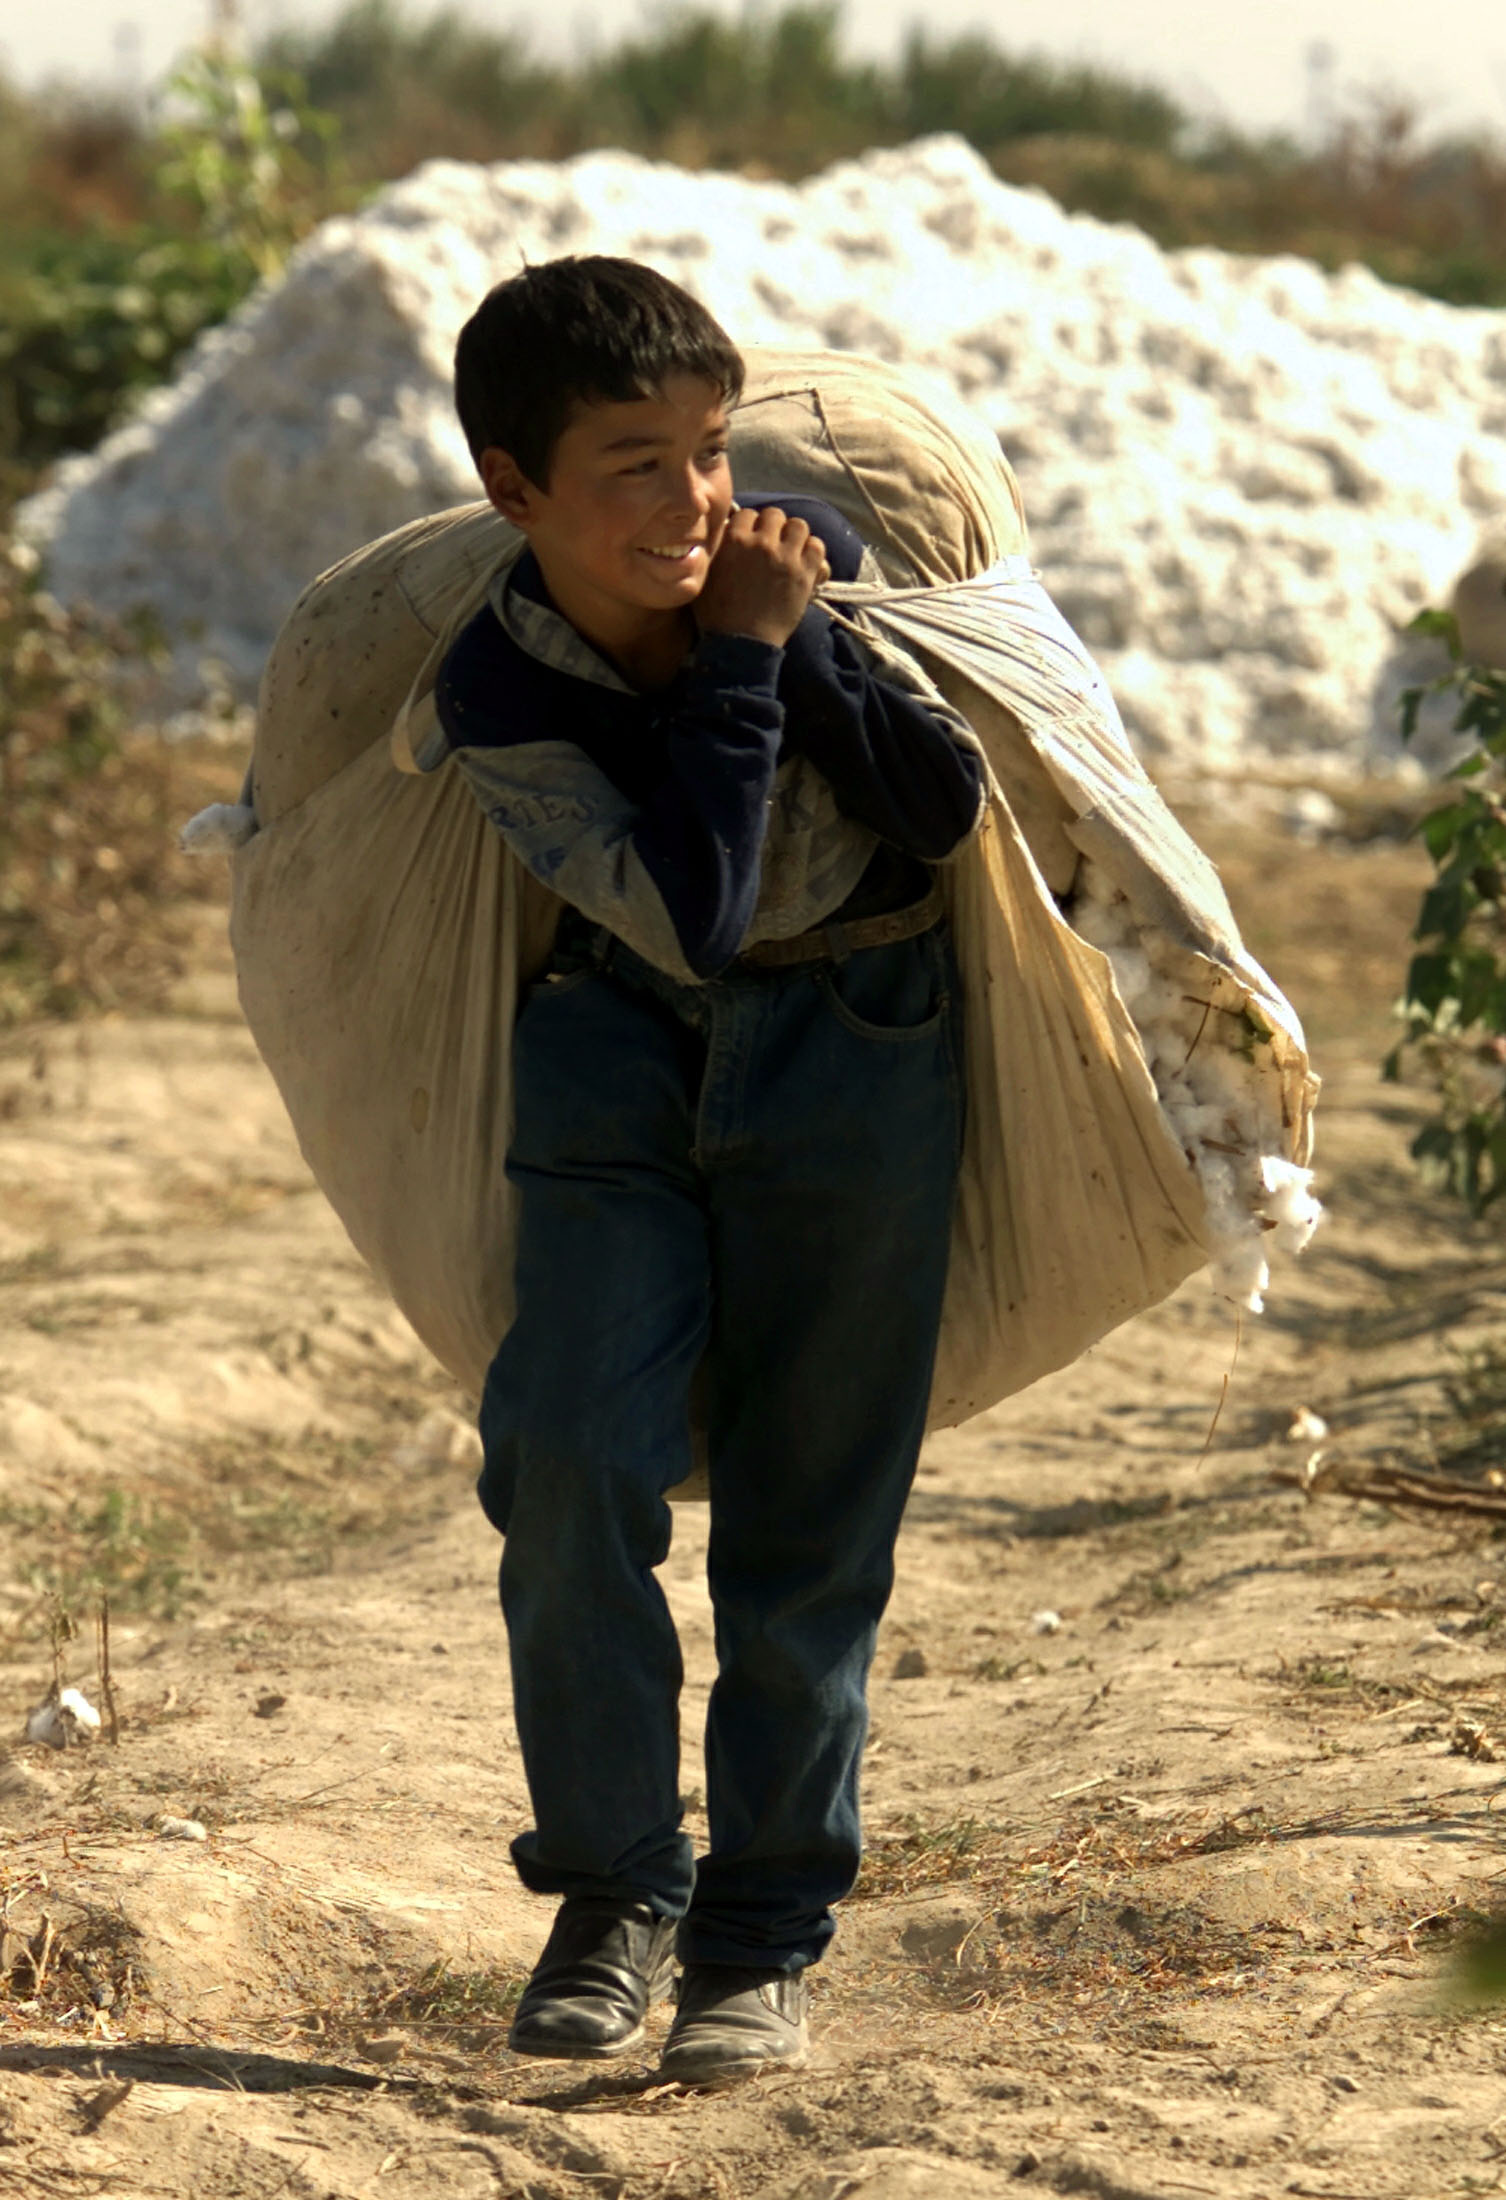 -PHOTO TAKEN 30SEP03- An Uzbek boy carries a sack with raw cotton on a field near Yallama